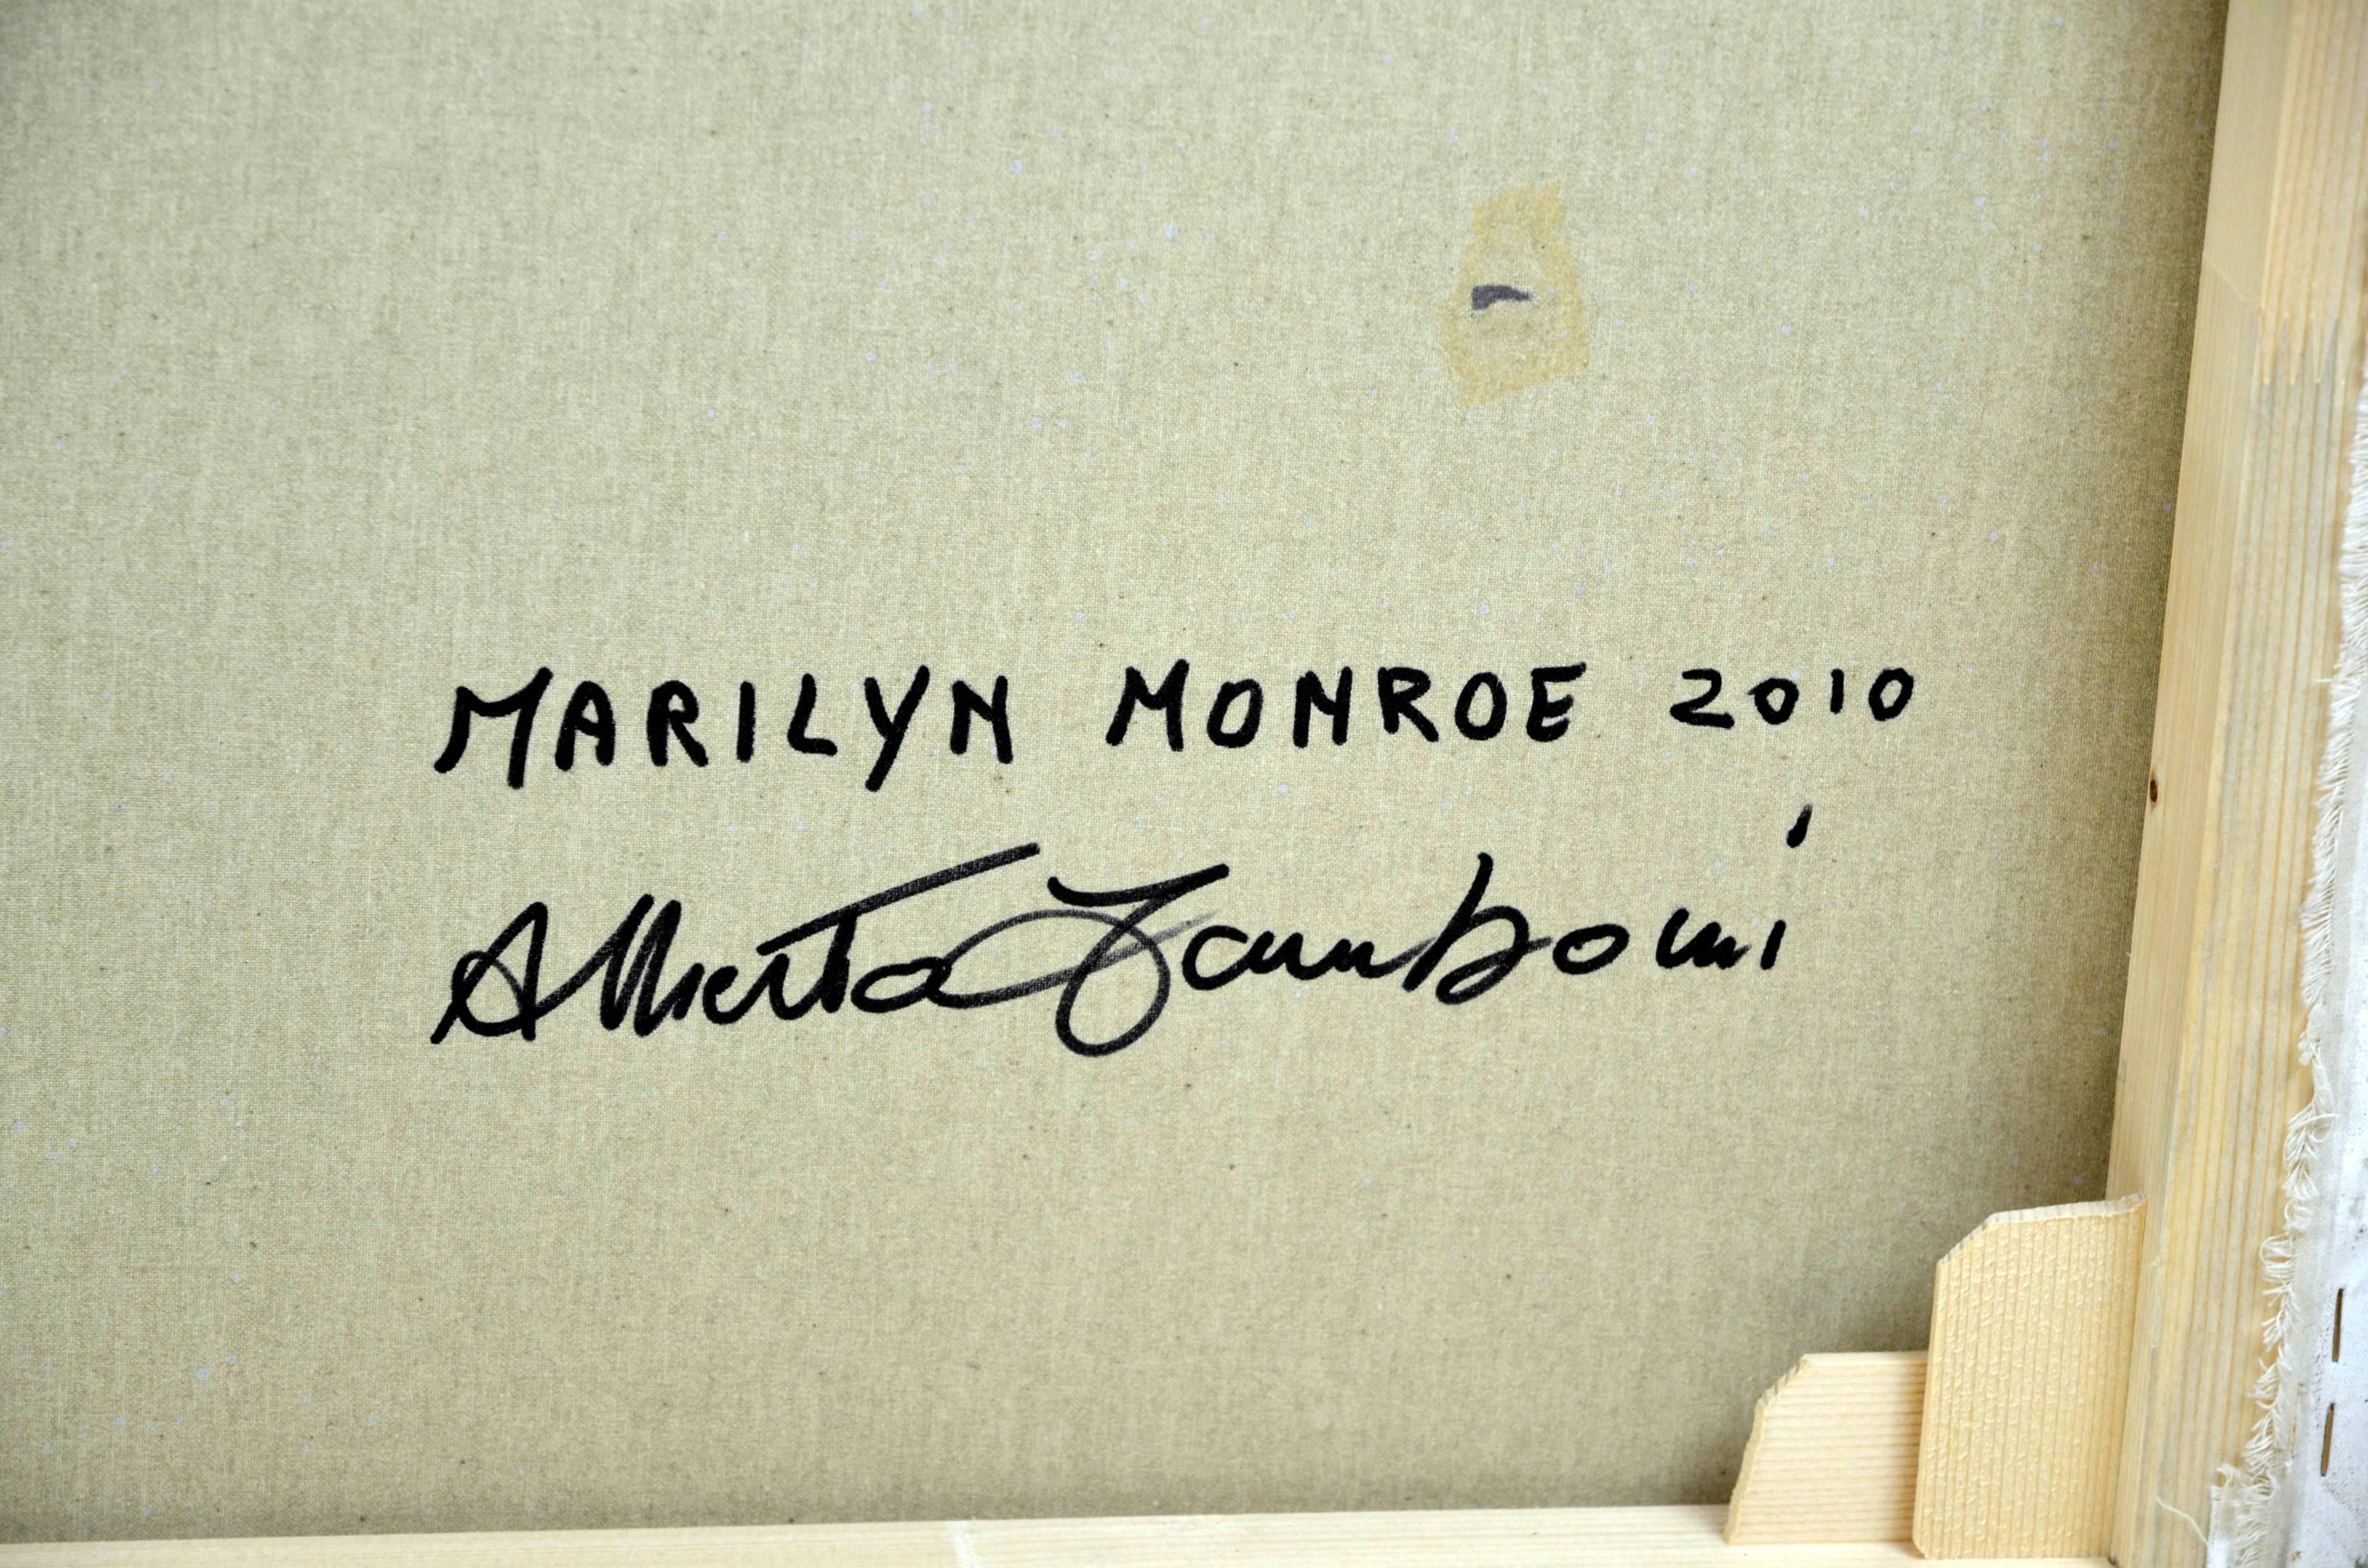 2010 Marilyn Monroe Acrylic on Canvas by Alberto Zamboni 2